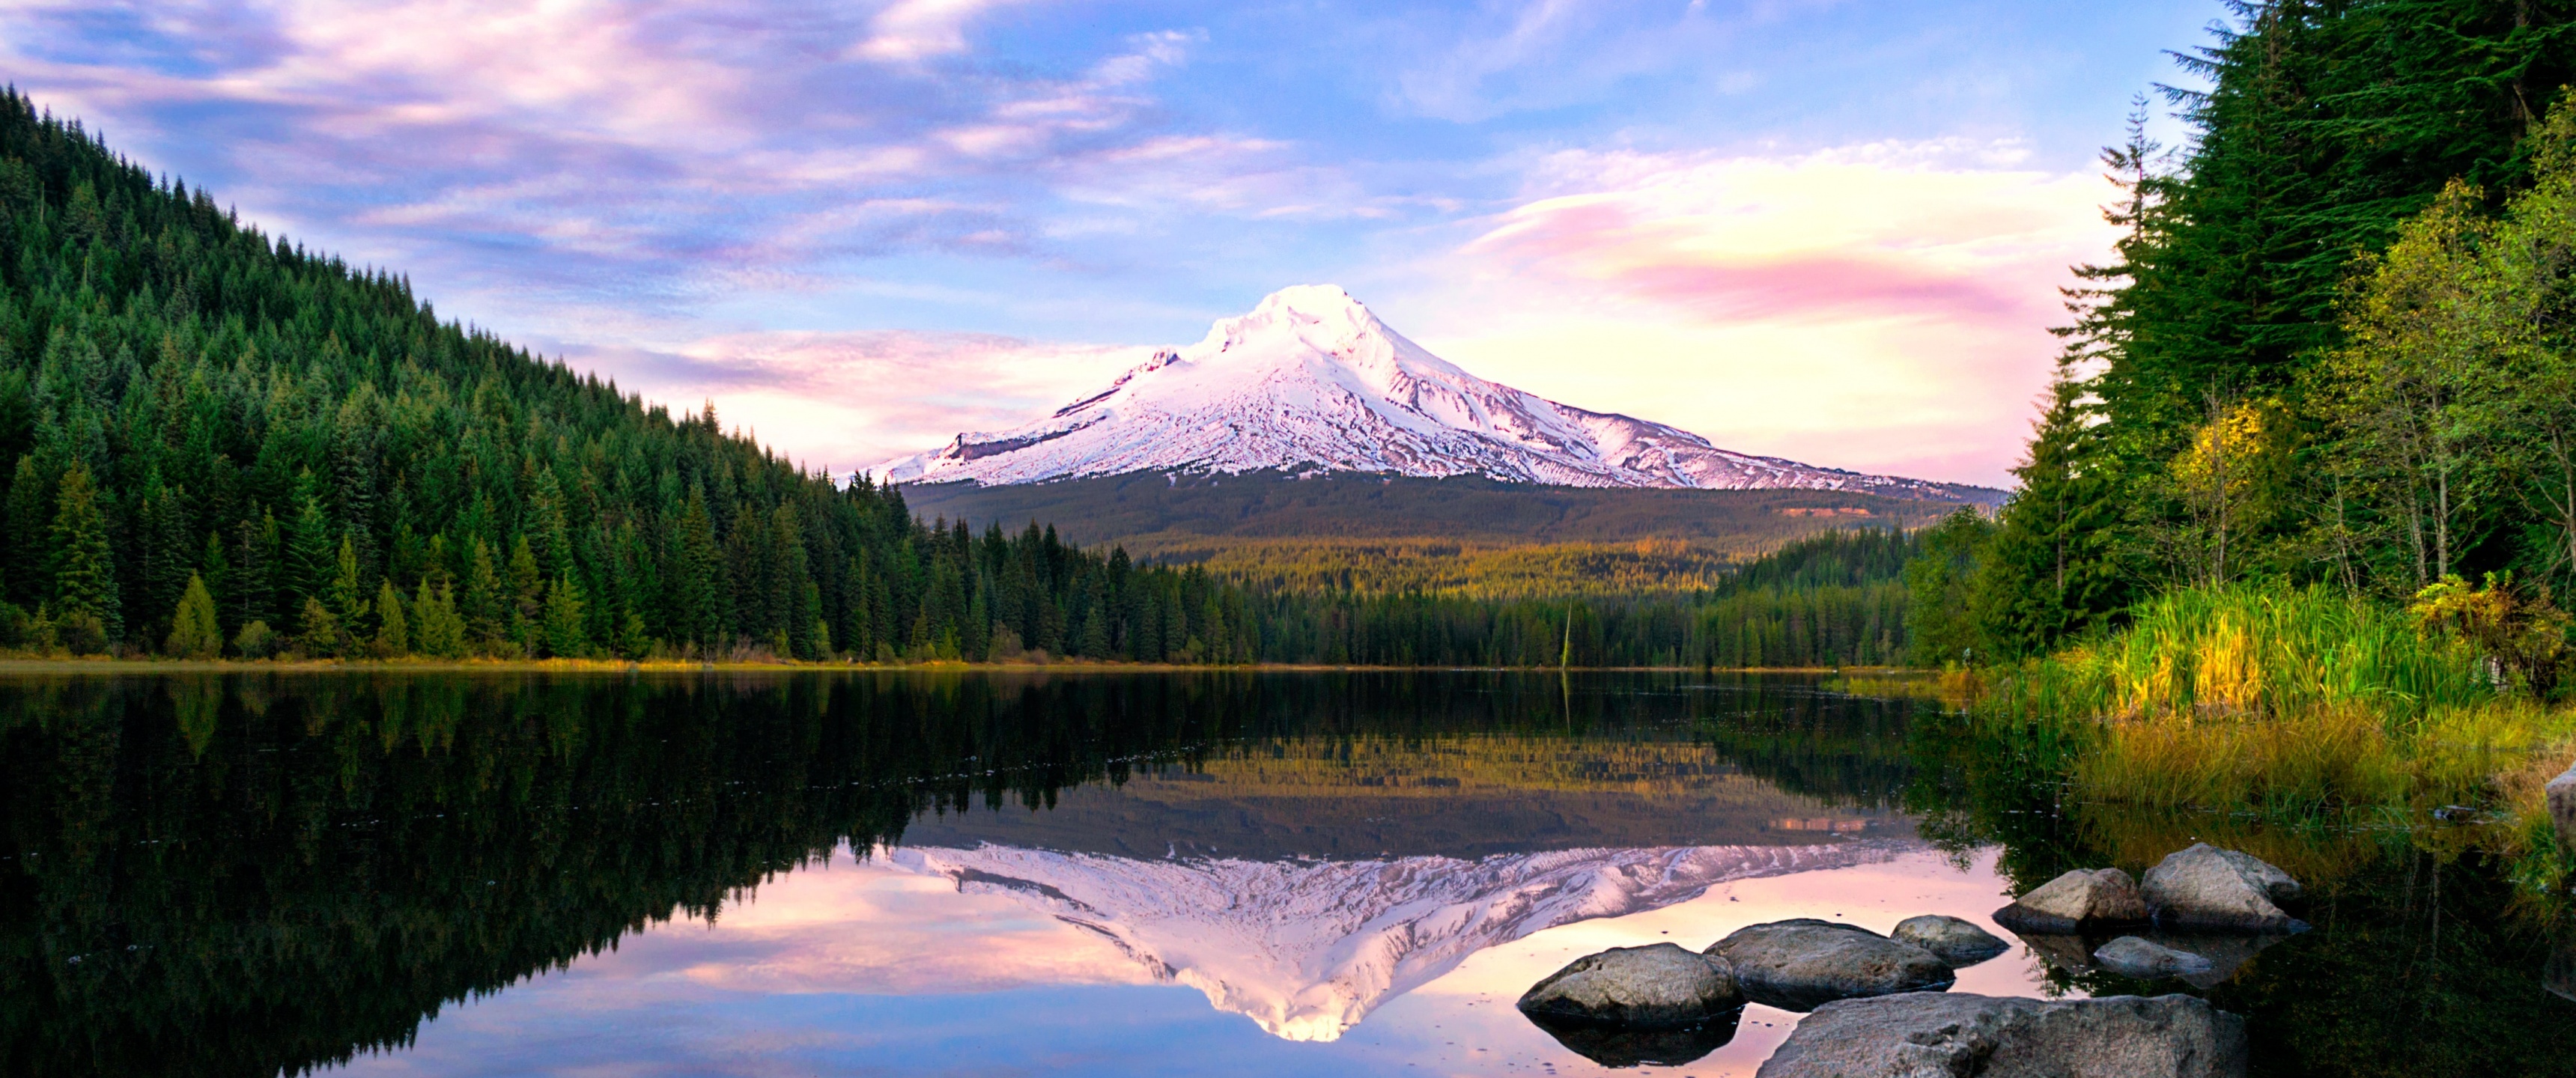 Mount Hood, Oregon, Travels, Trillium lake wallpaper, Pine trees forest, 3440x1440 Dual Screen Desktop